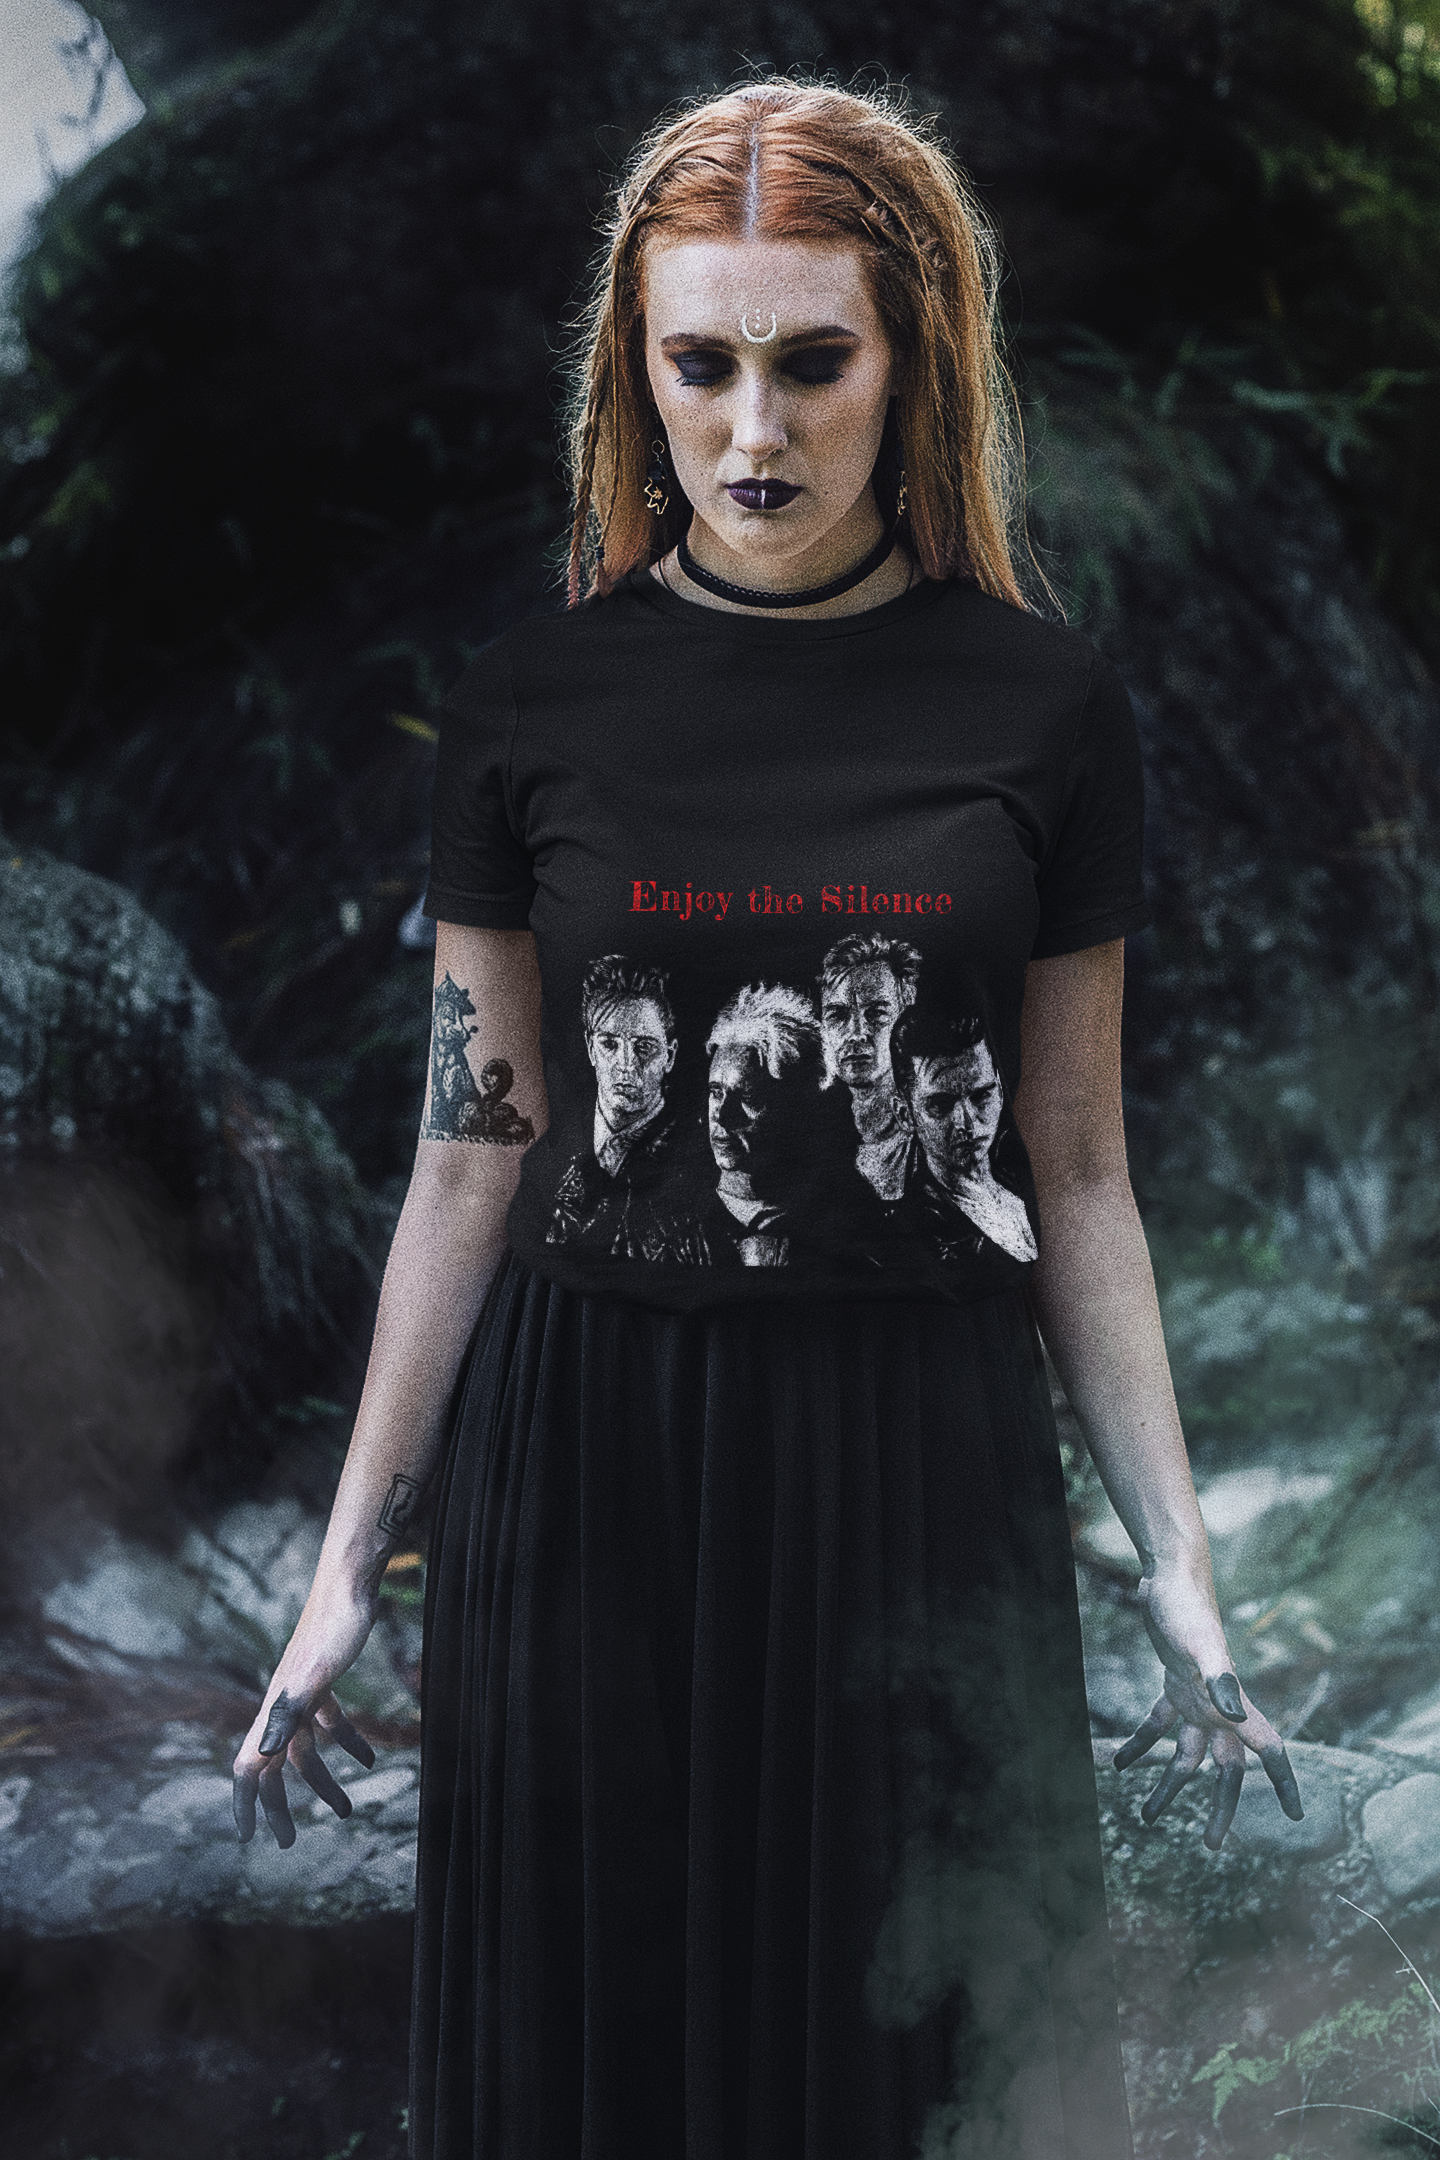 Depeche Mode women's t-shirt - Enjoy the Silence, gift for music fans